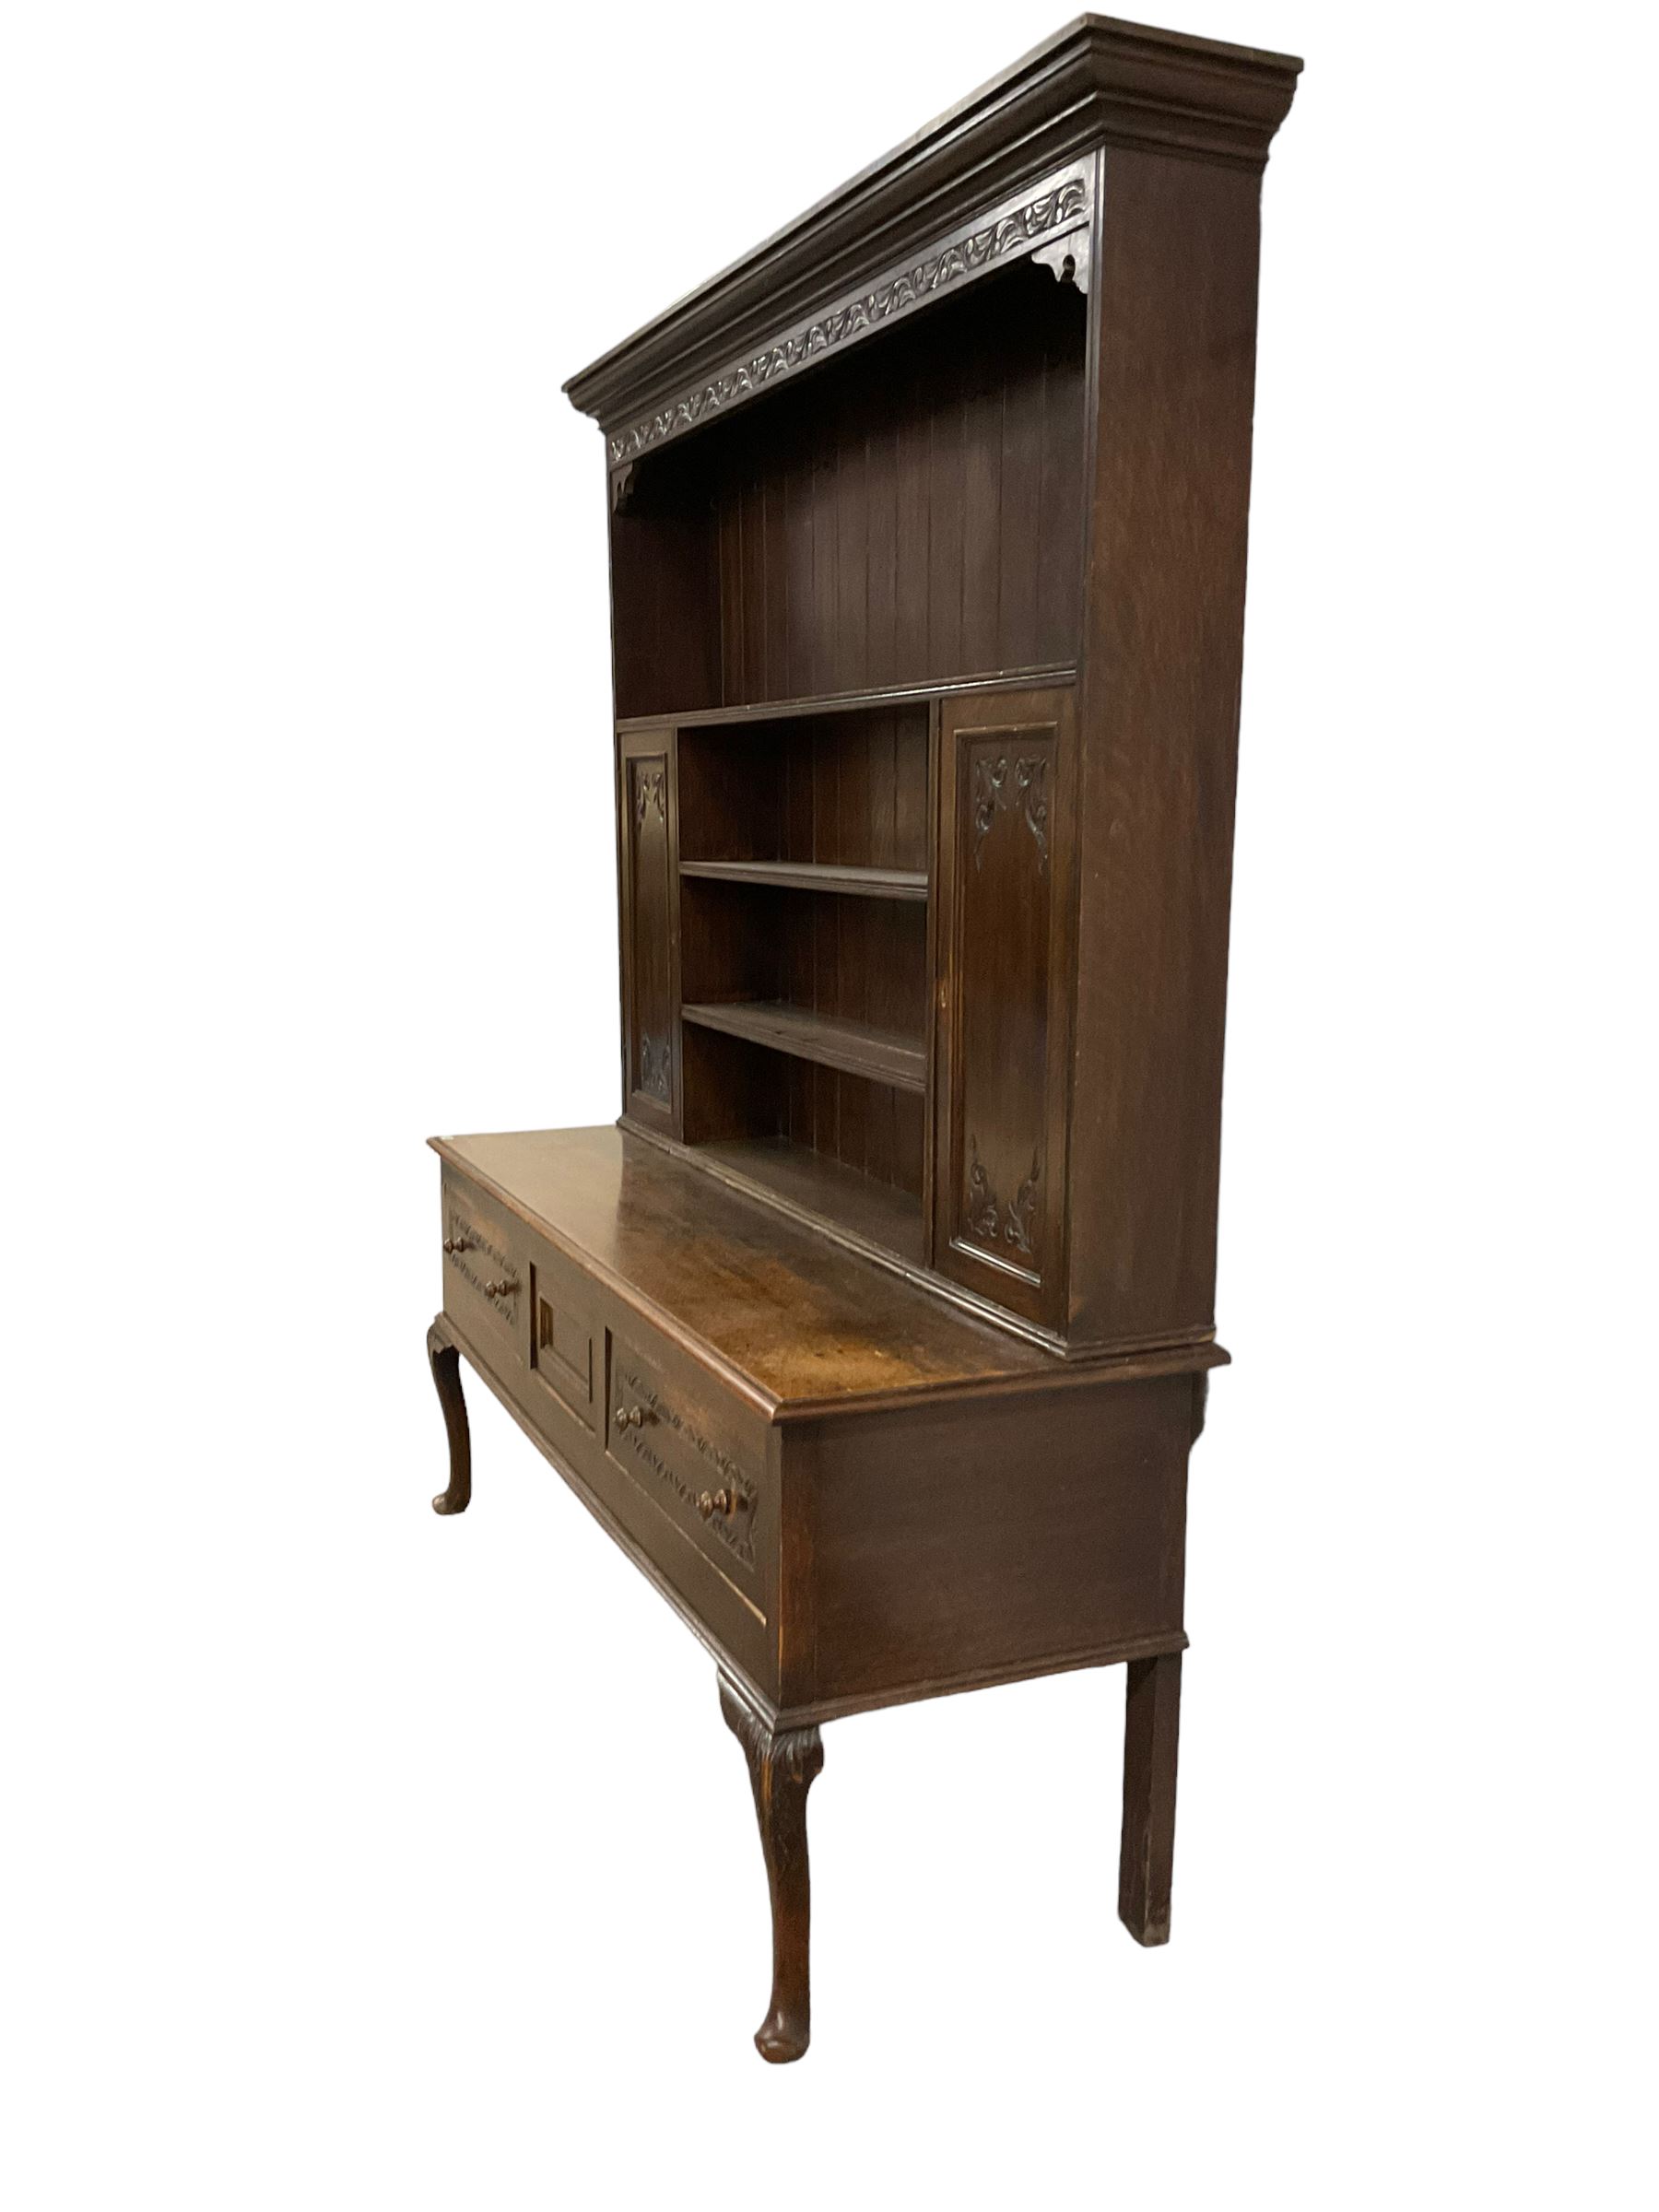 19th century oak dresser - Image 2 of 7